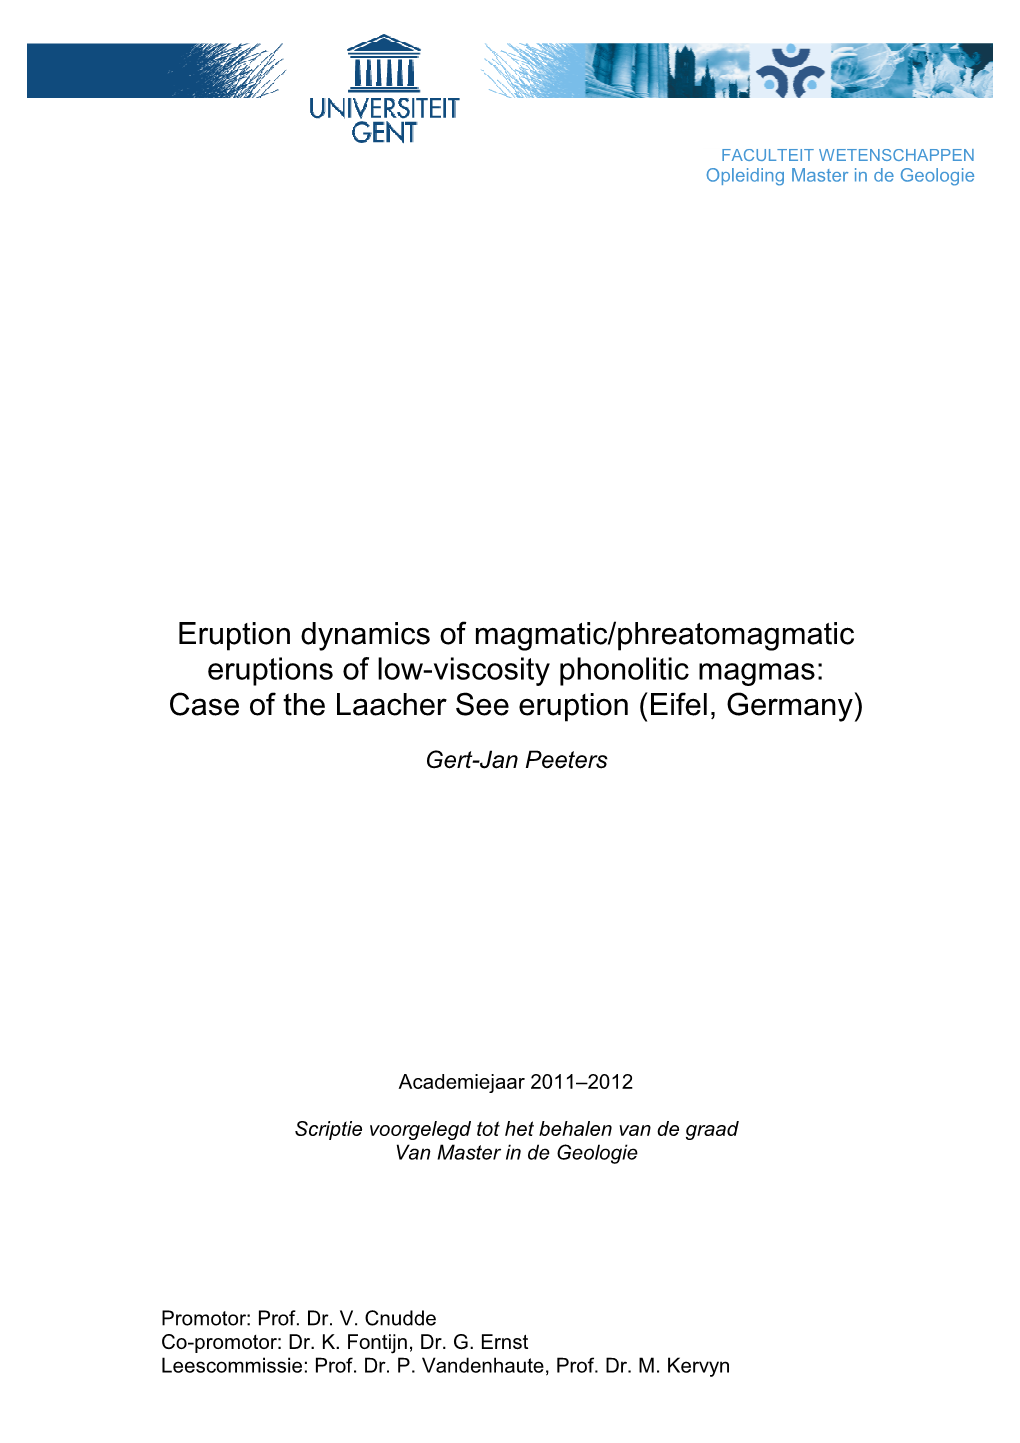 Eruption Dynamics of Magmatic/Phreatomagmatic Eruptions of Low-Viscosity Phonolitic Magmas: Case of the Laacher See Eruption (Eifel, Germany)